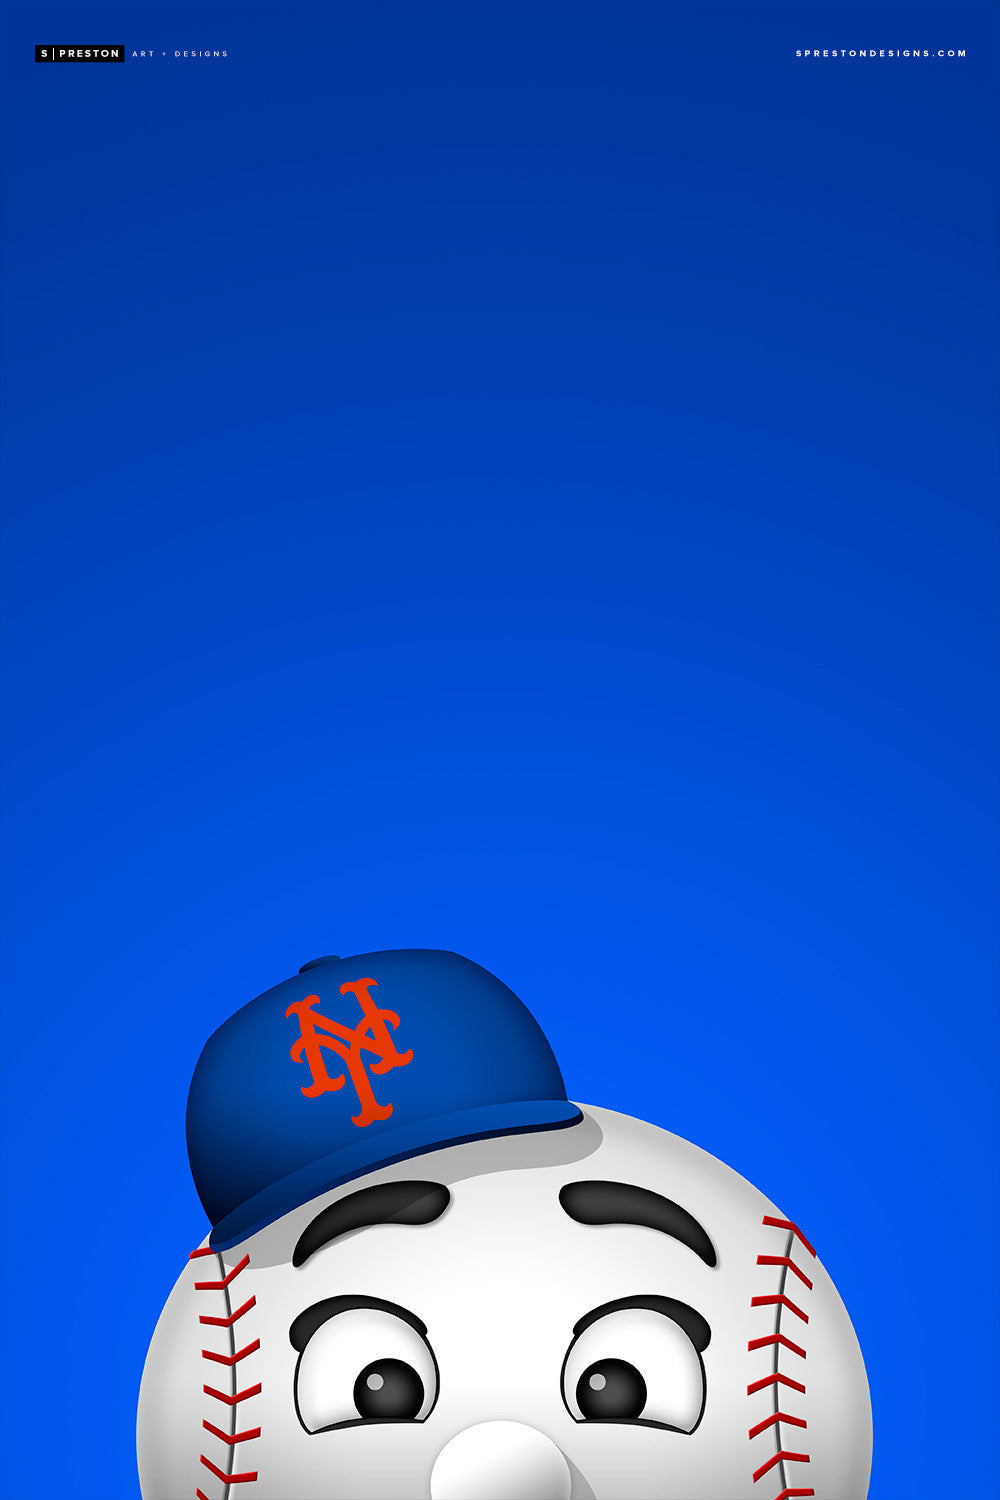 Minimalist Mr. Met Mascot Canvas Wrap - New York Mets – S. Preston Art +  Designs